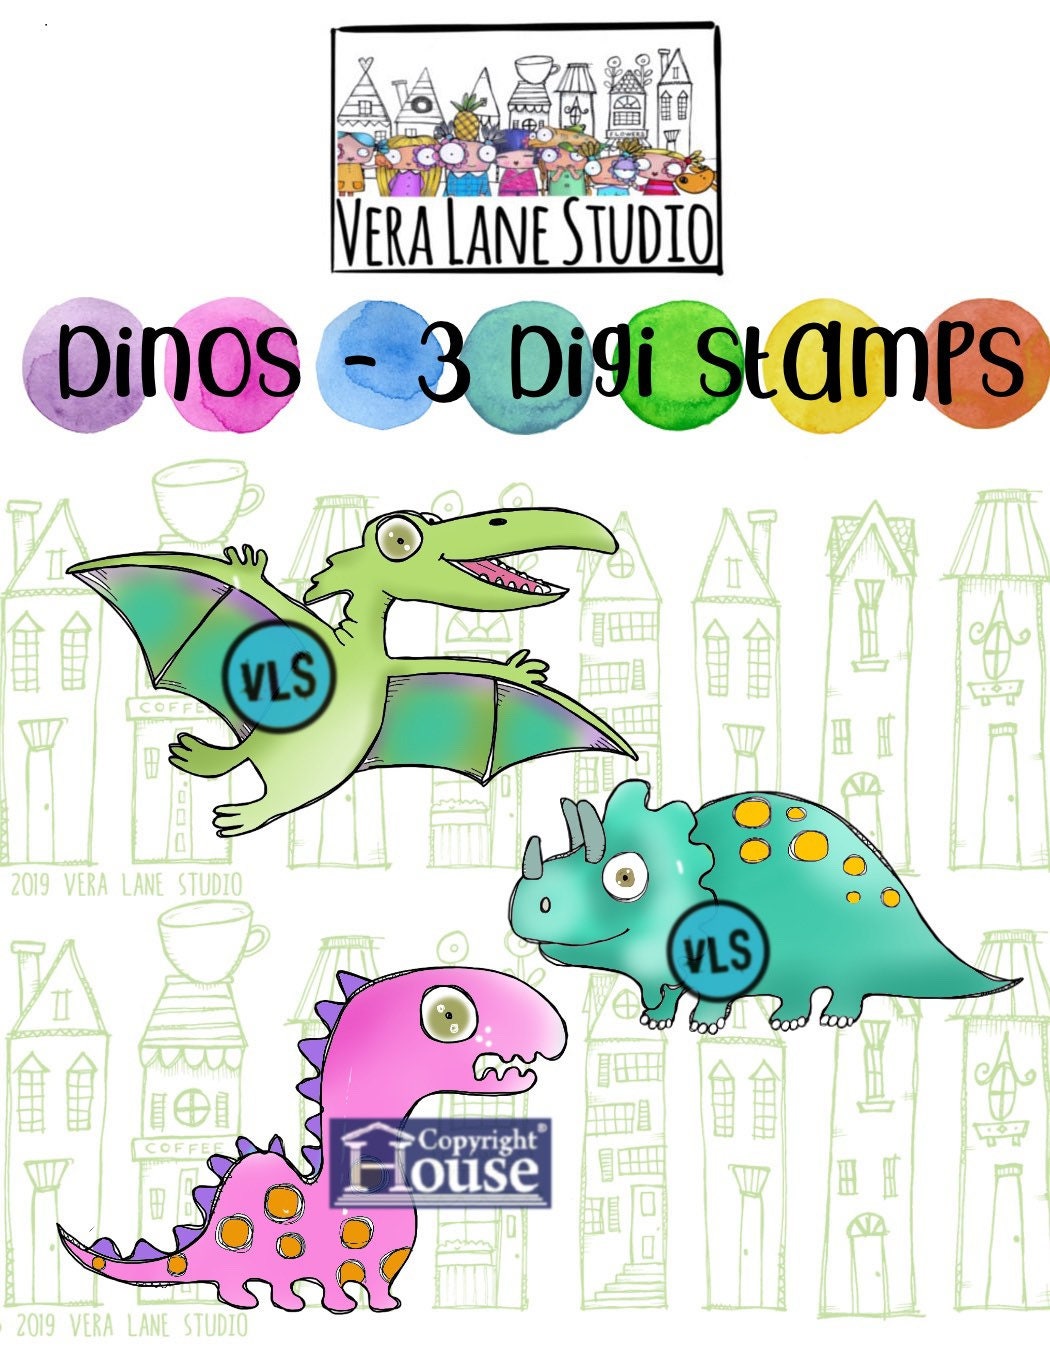 Dino’s -3 digi stamps